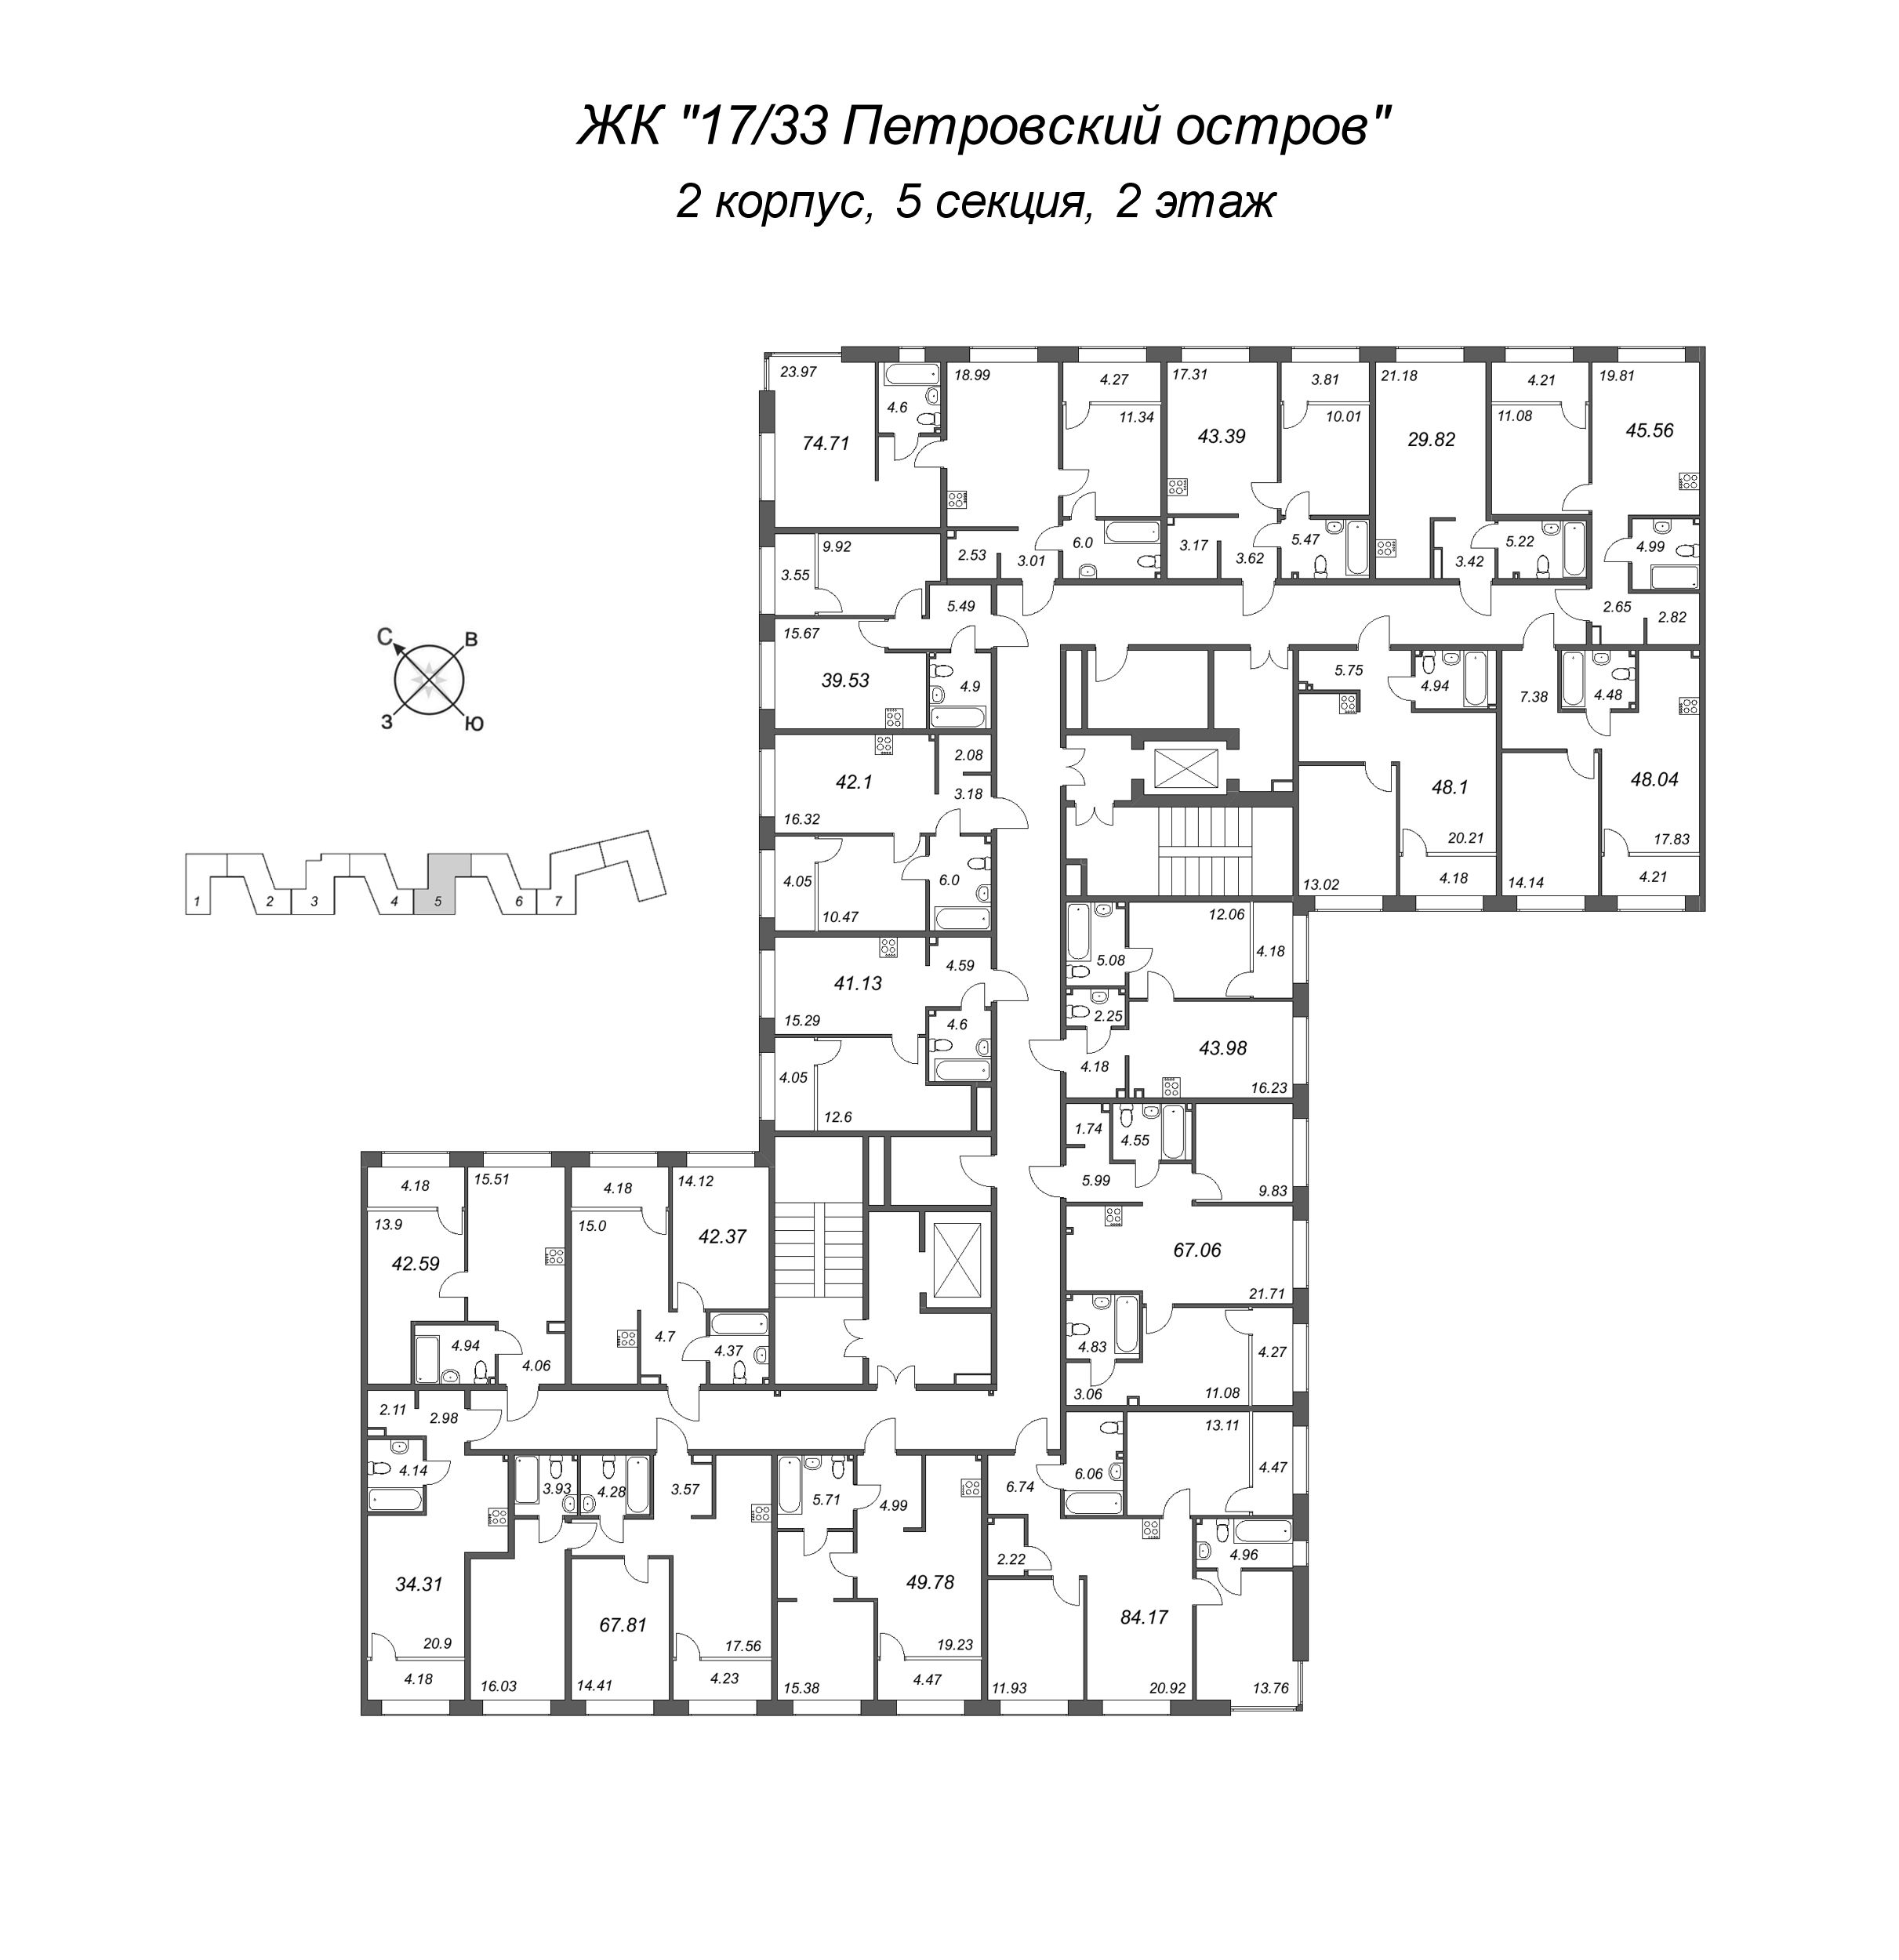 2-комнатная (Евро) квартира, 42.59 м² - планировка этажа